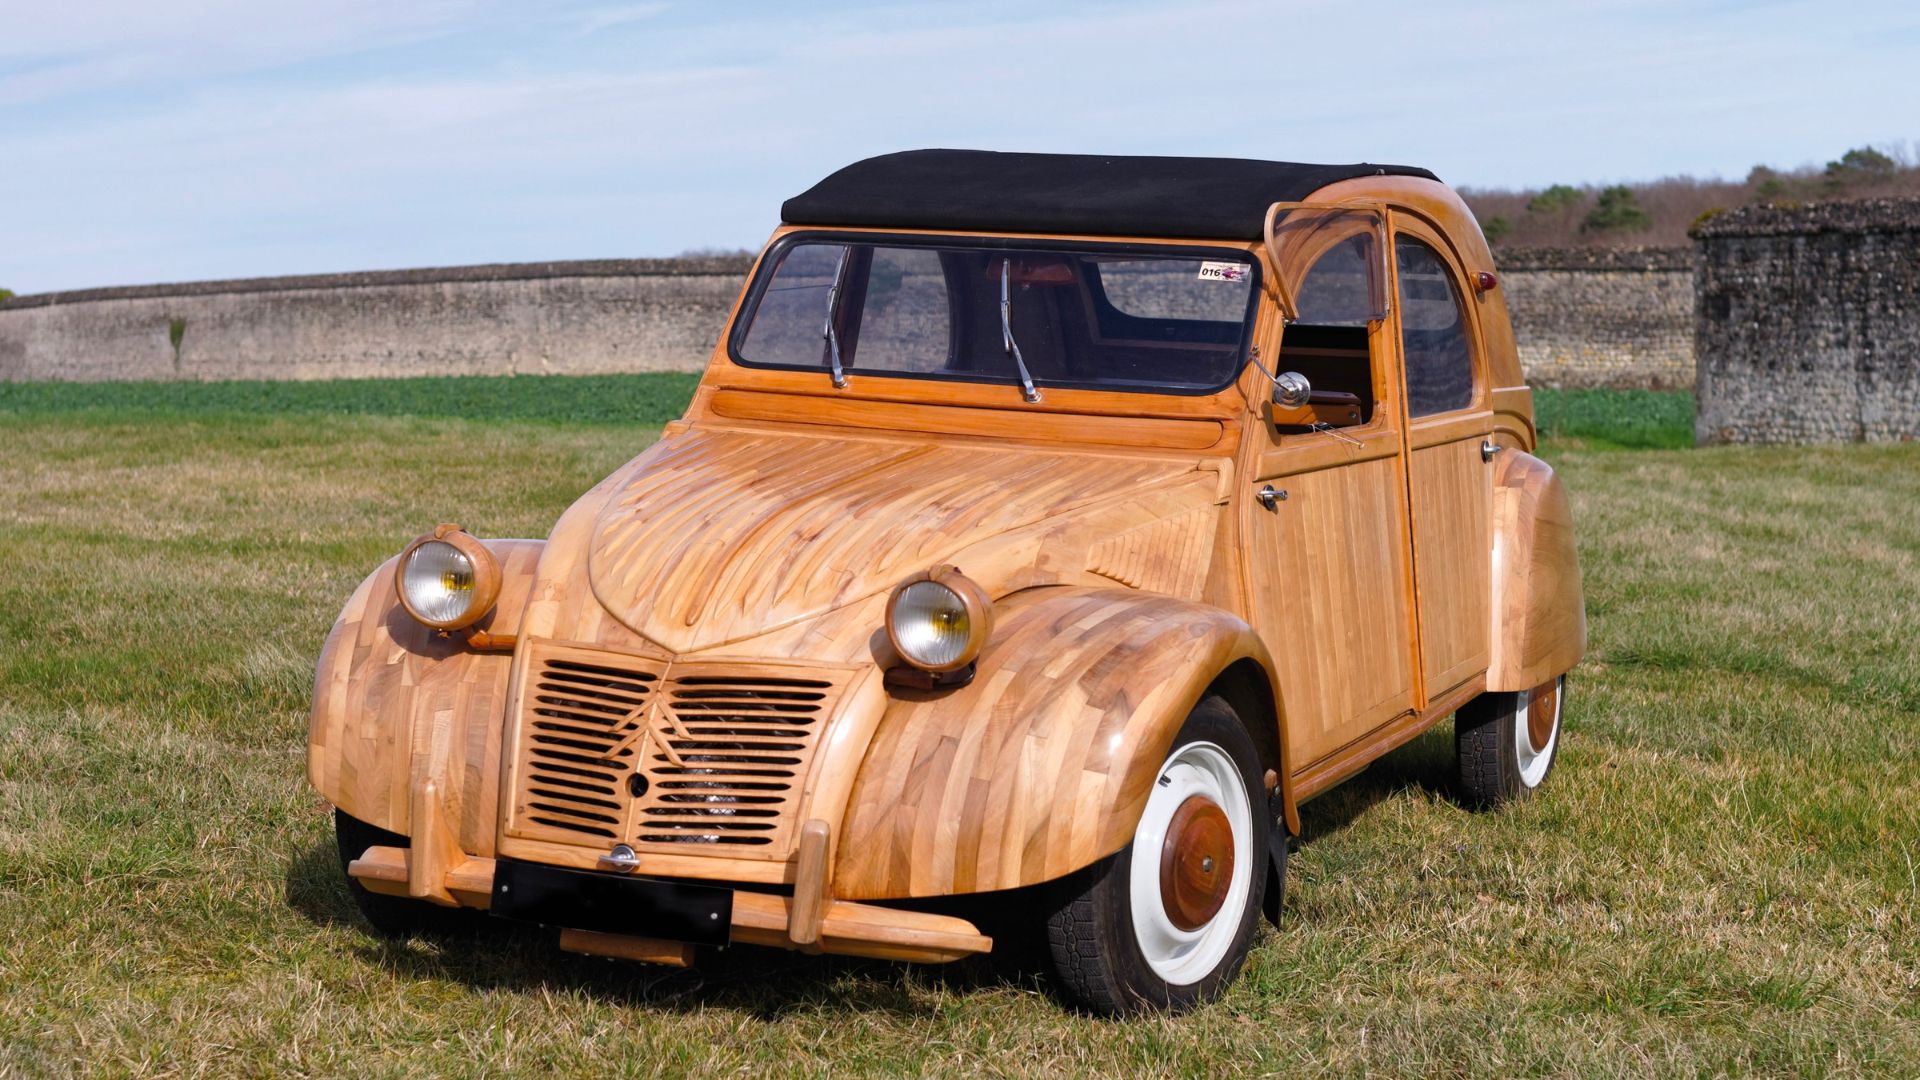 Tree-mendous Ride: Wooden Citroen 2CV Sells For 210,000 Euros - Forbes India